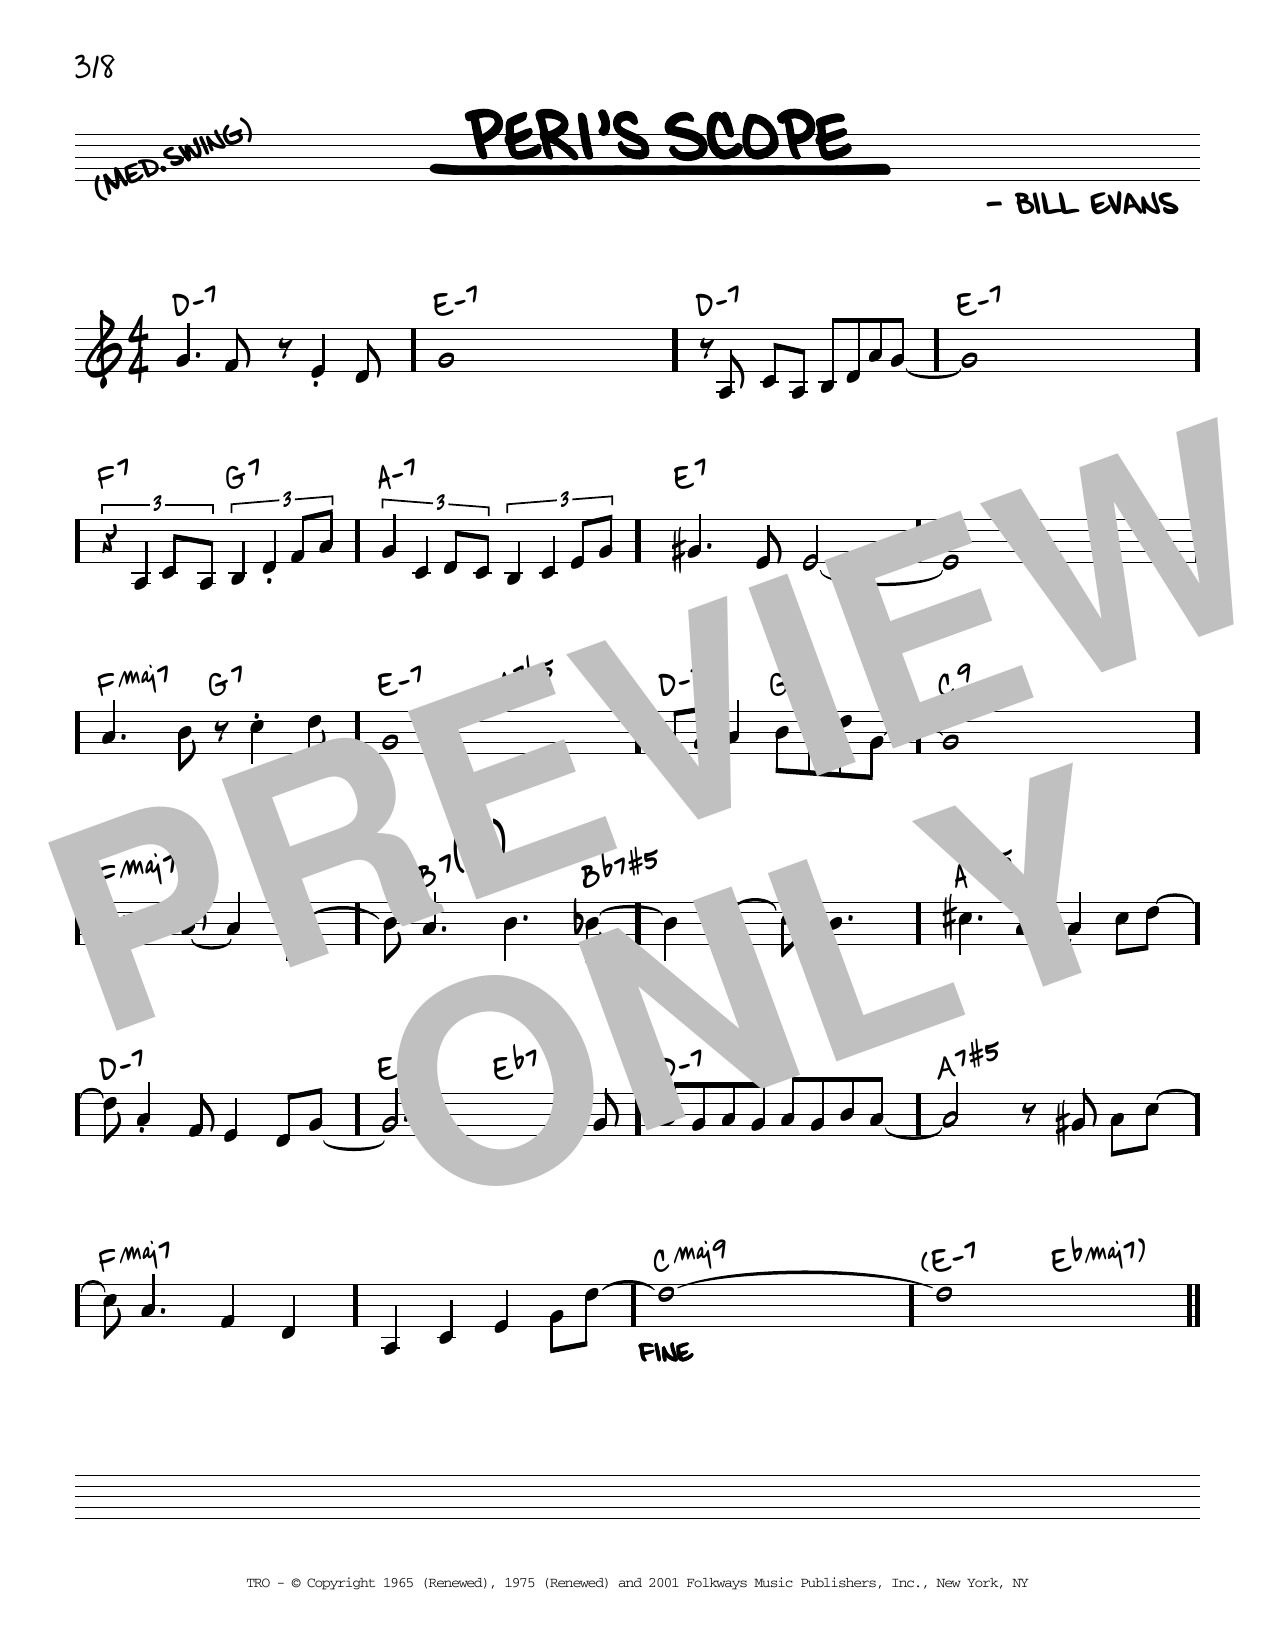 Download Bill Evans Peri's Scope [Reharmonized version] (ar Sheet Music